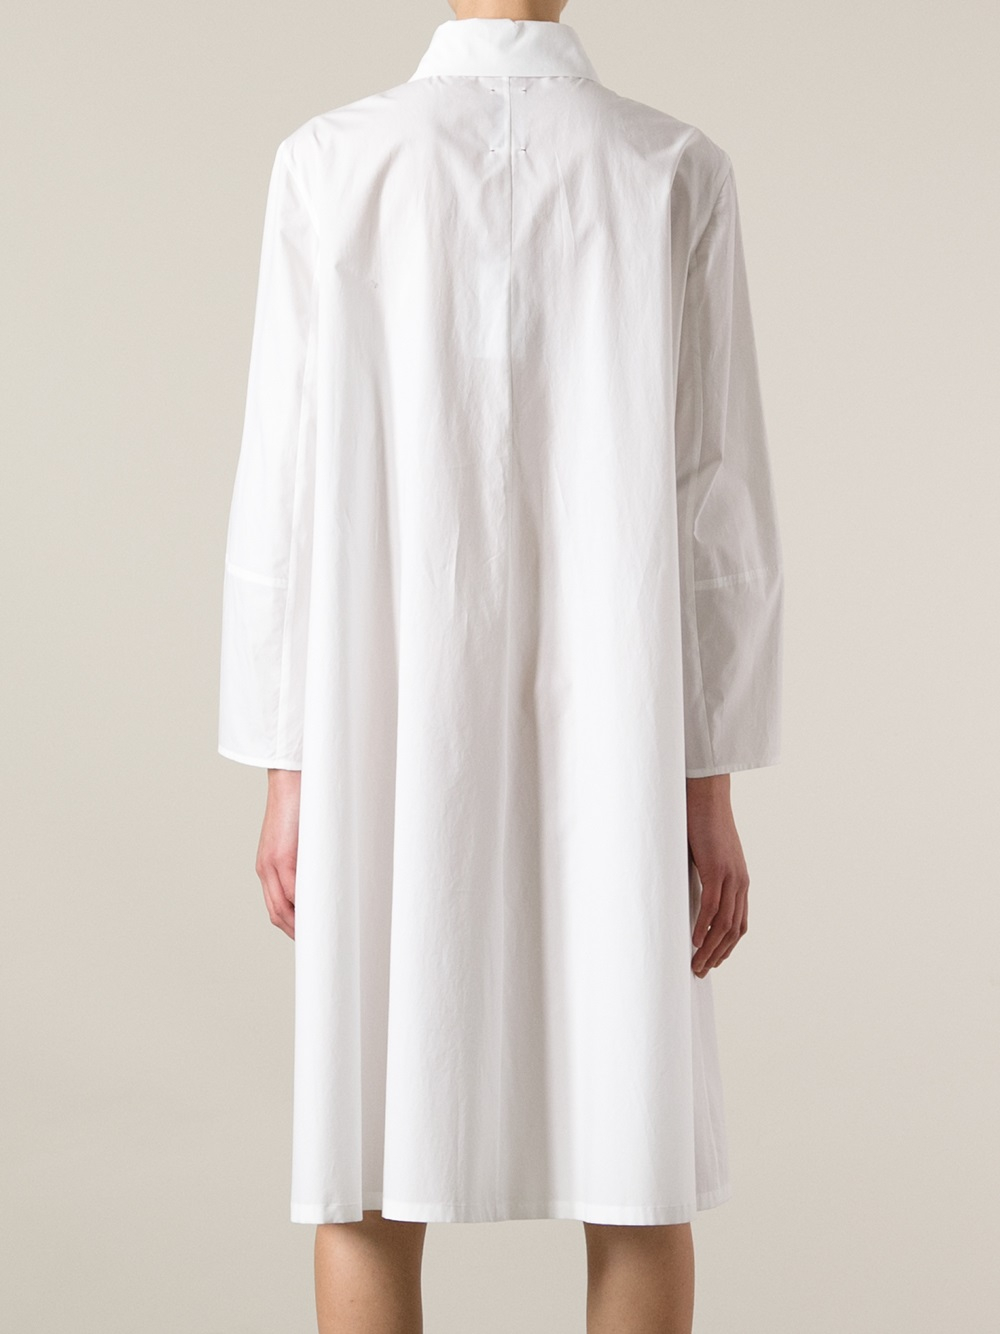 Lyst - Antonio marras Long Sleeve Shirt Dress in White